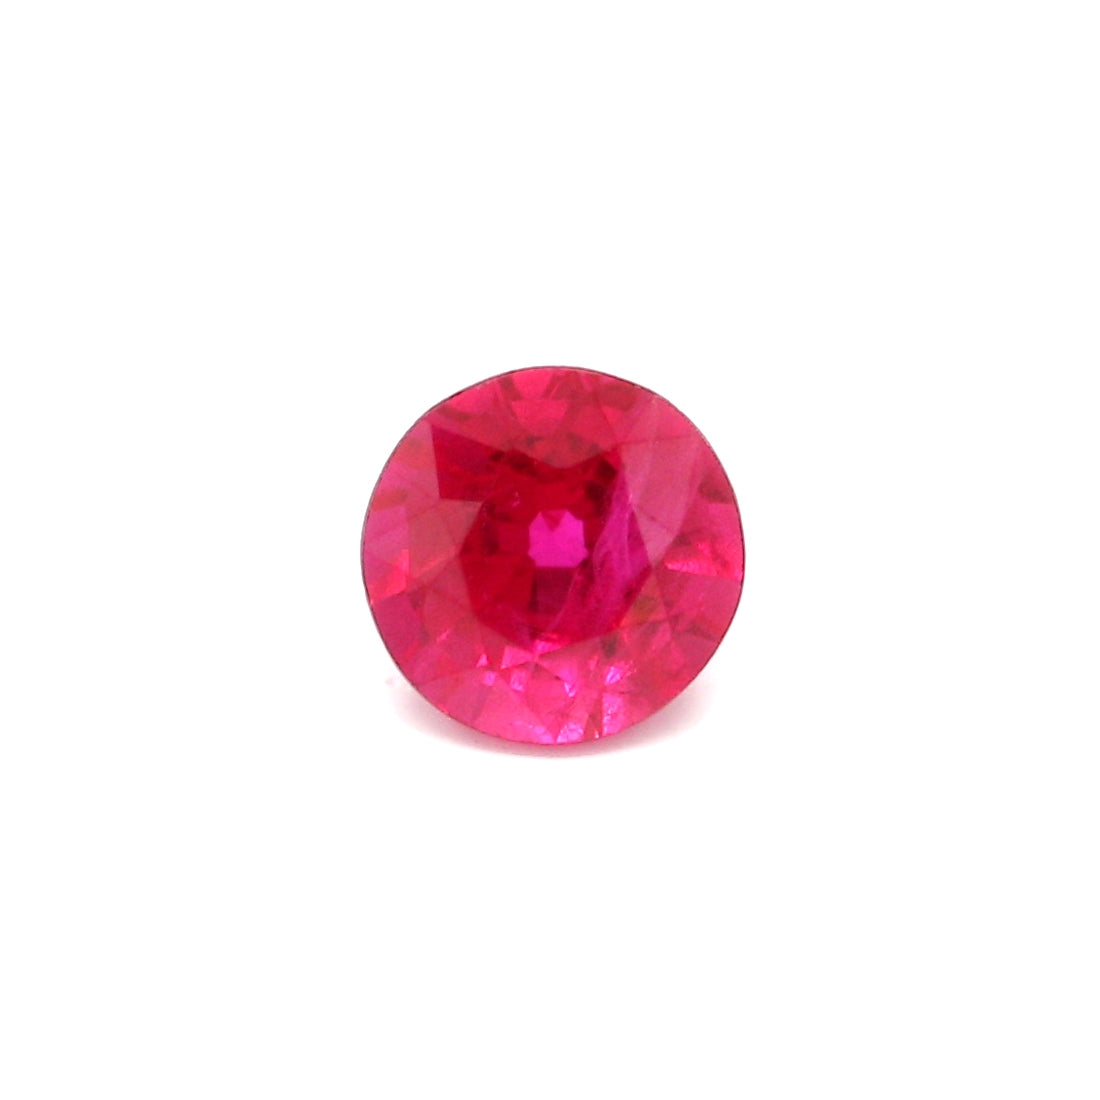 0.43ct Round Ruby, H(a), Myanmar - 4.38 x 4.47 x 2.87mm